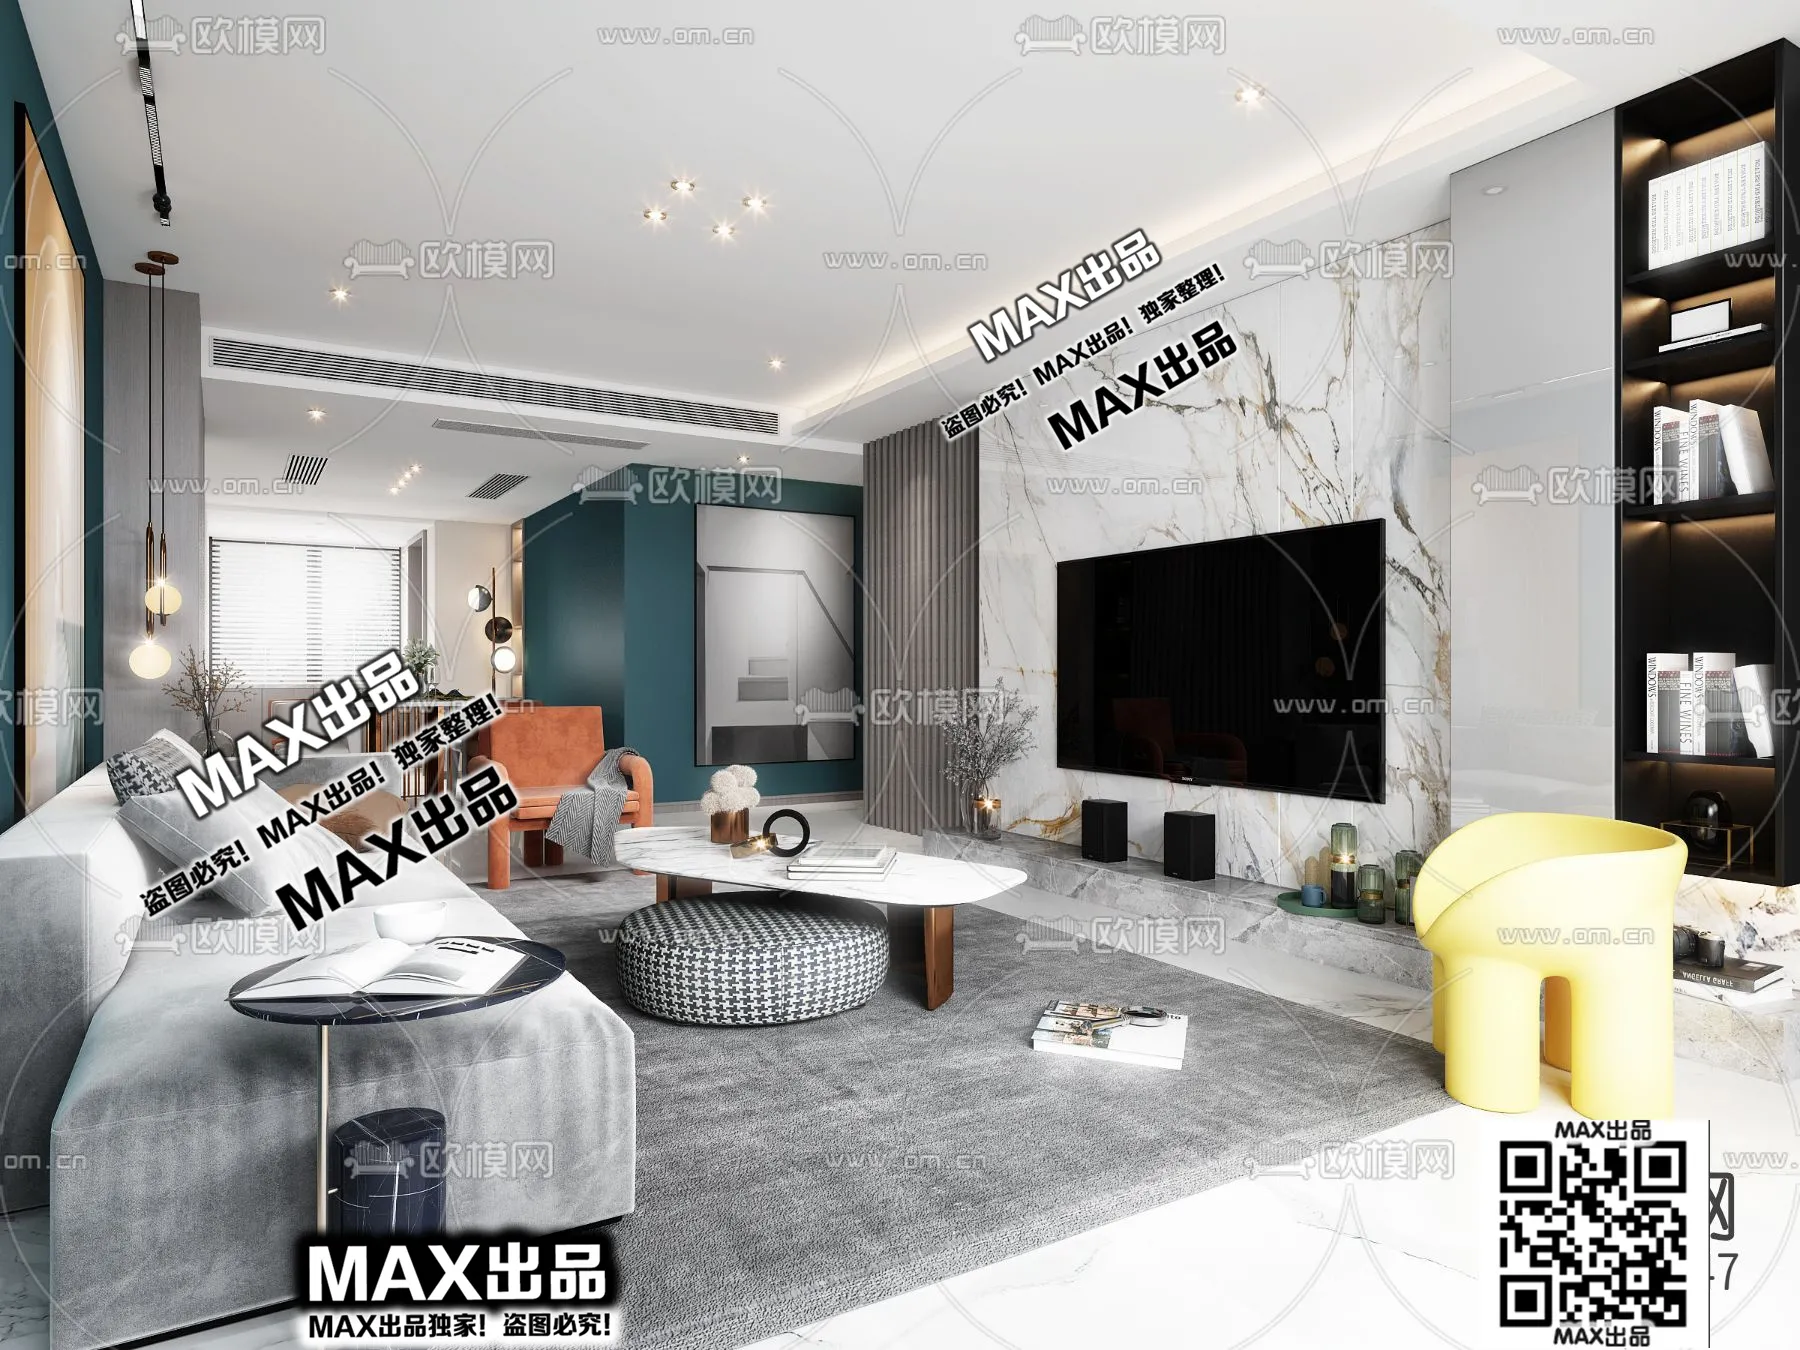 3DS MAX SCENES – LIVING ROOM – 067